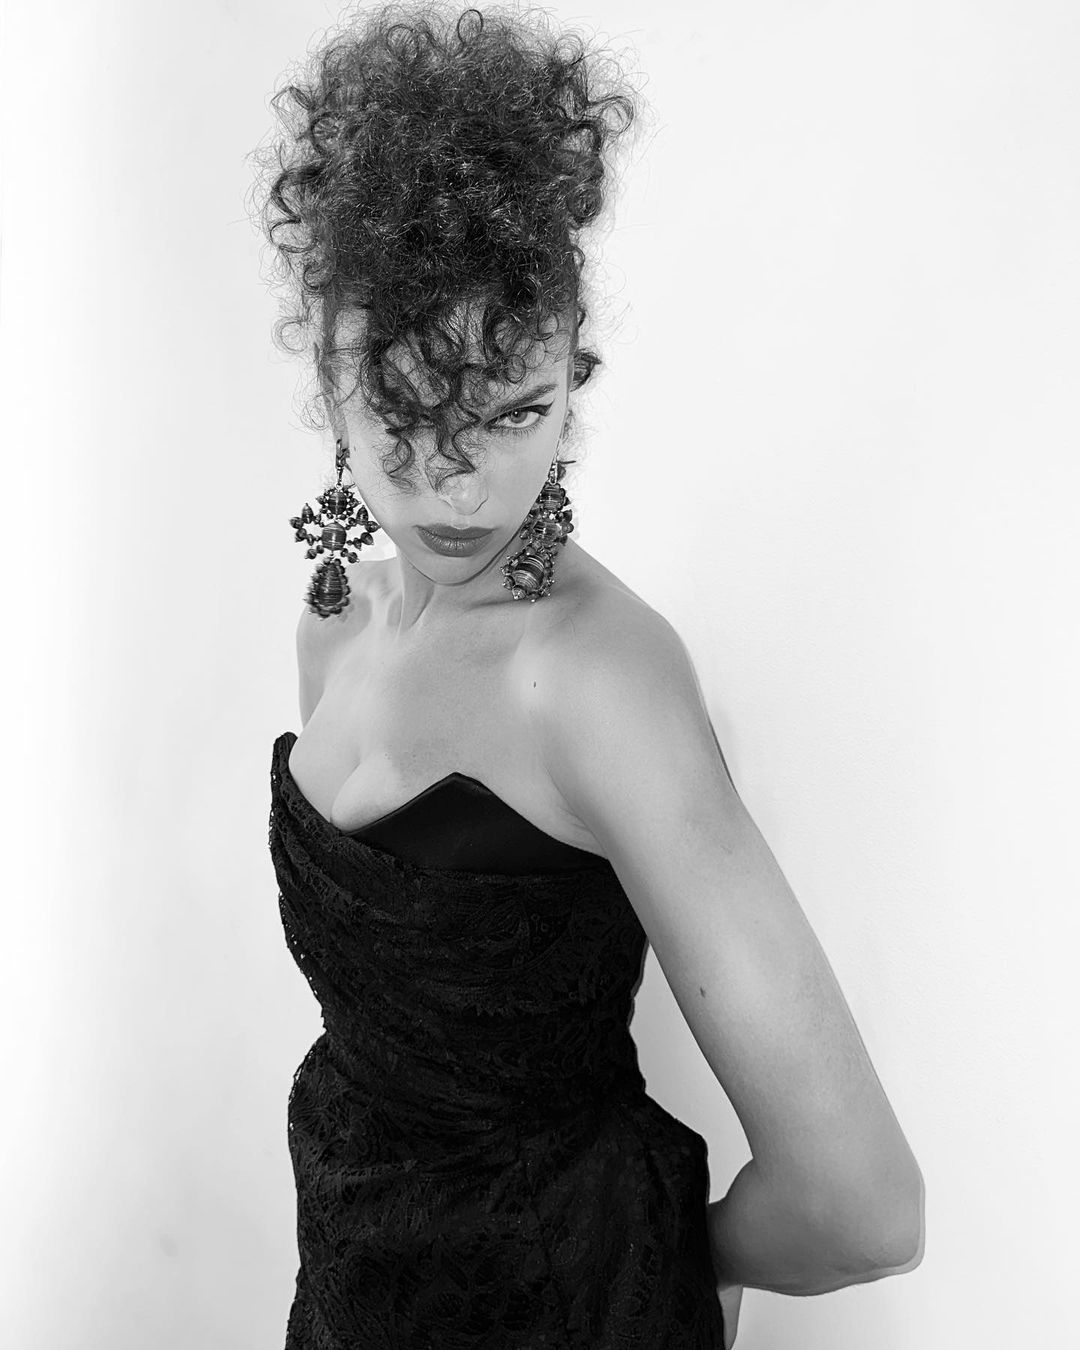 Irina Shayk Rocks Curls for Westwood! - Photo 2